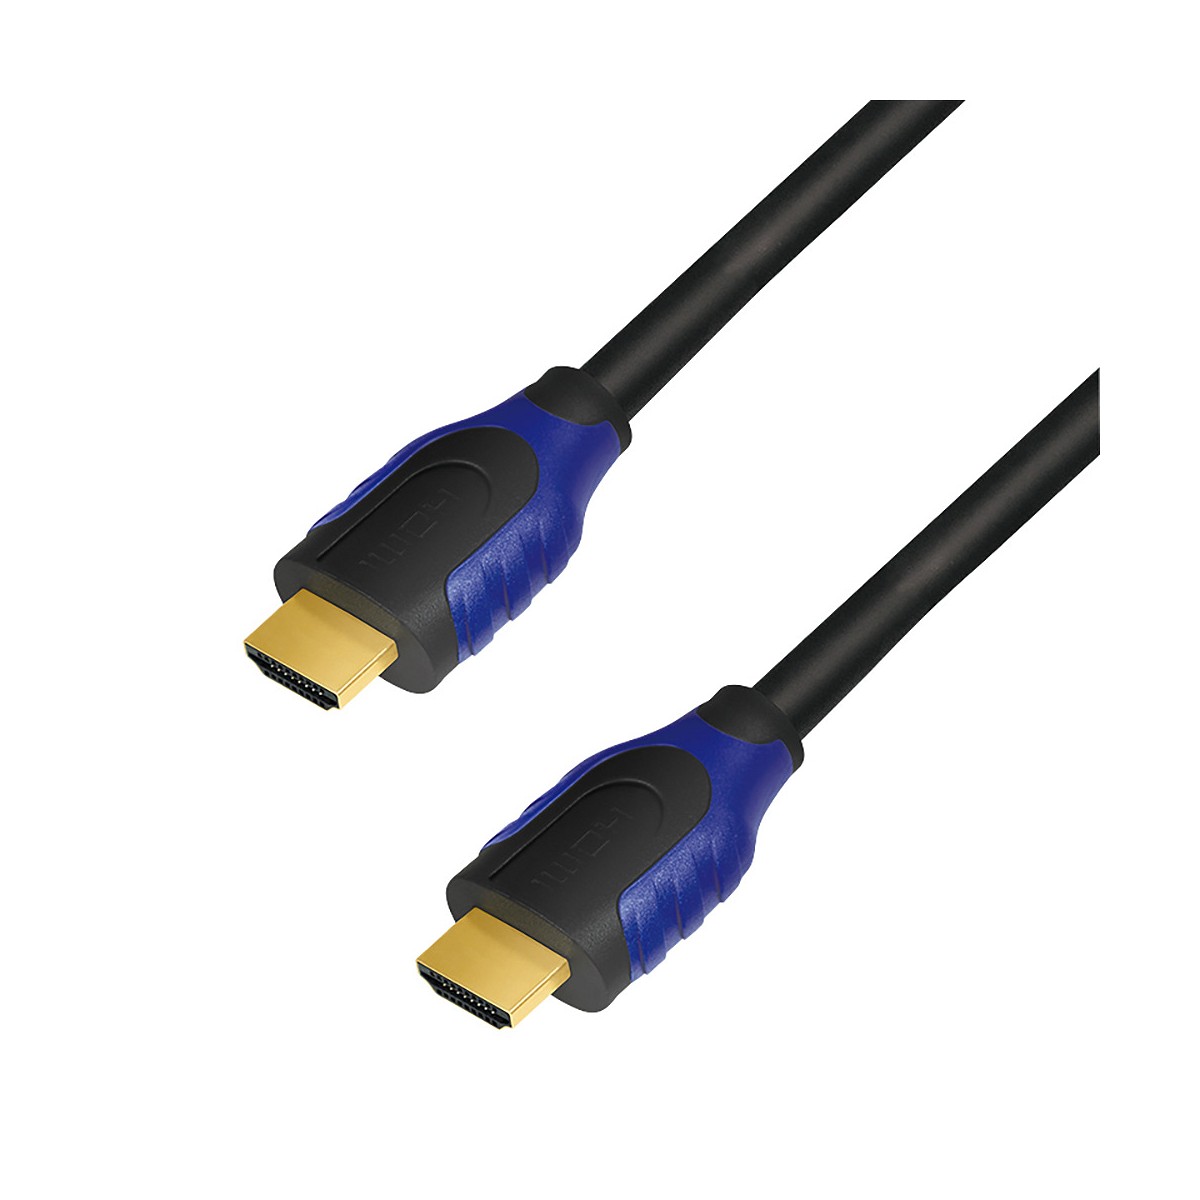 Cable hdmi 1m 2.0 con ethernet, 4k2k/60hz, negro